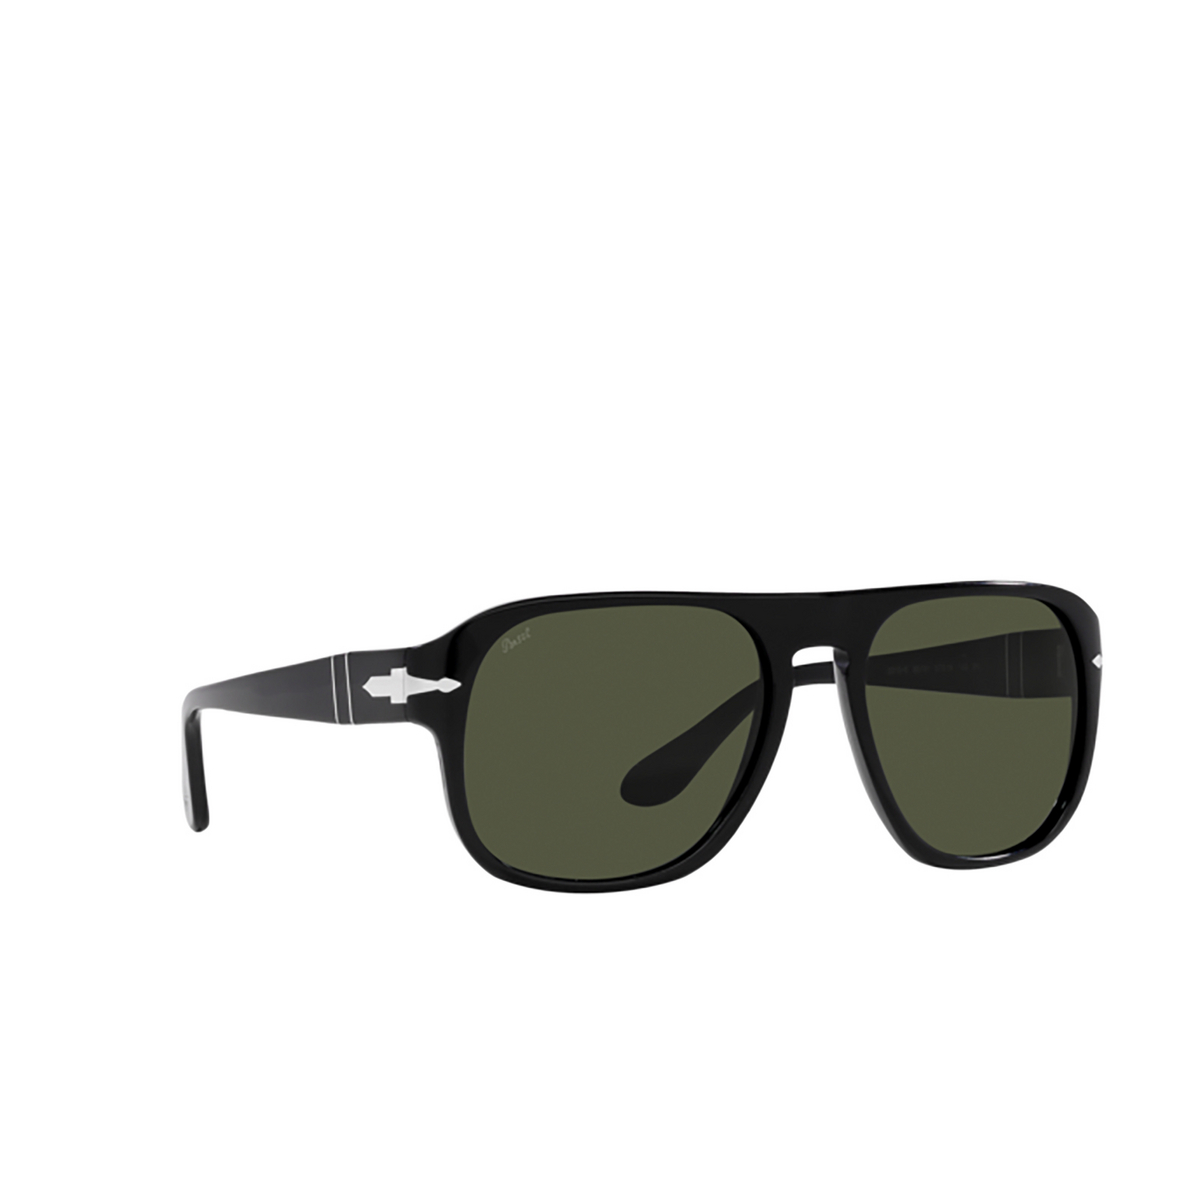 Persol JEAN Sunglasses 95/31 Black - three-quarters view